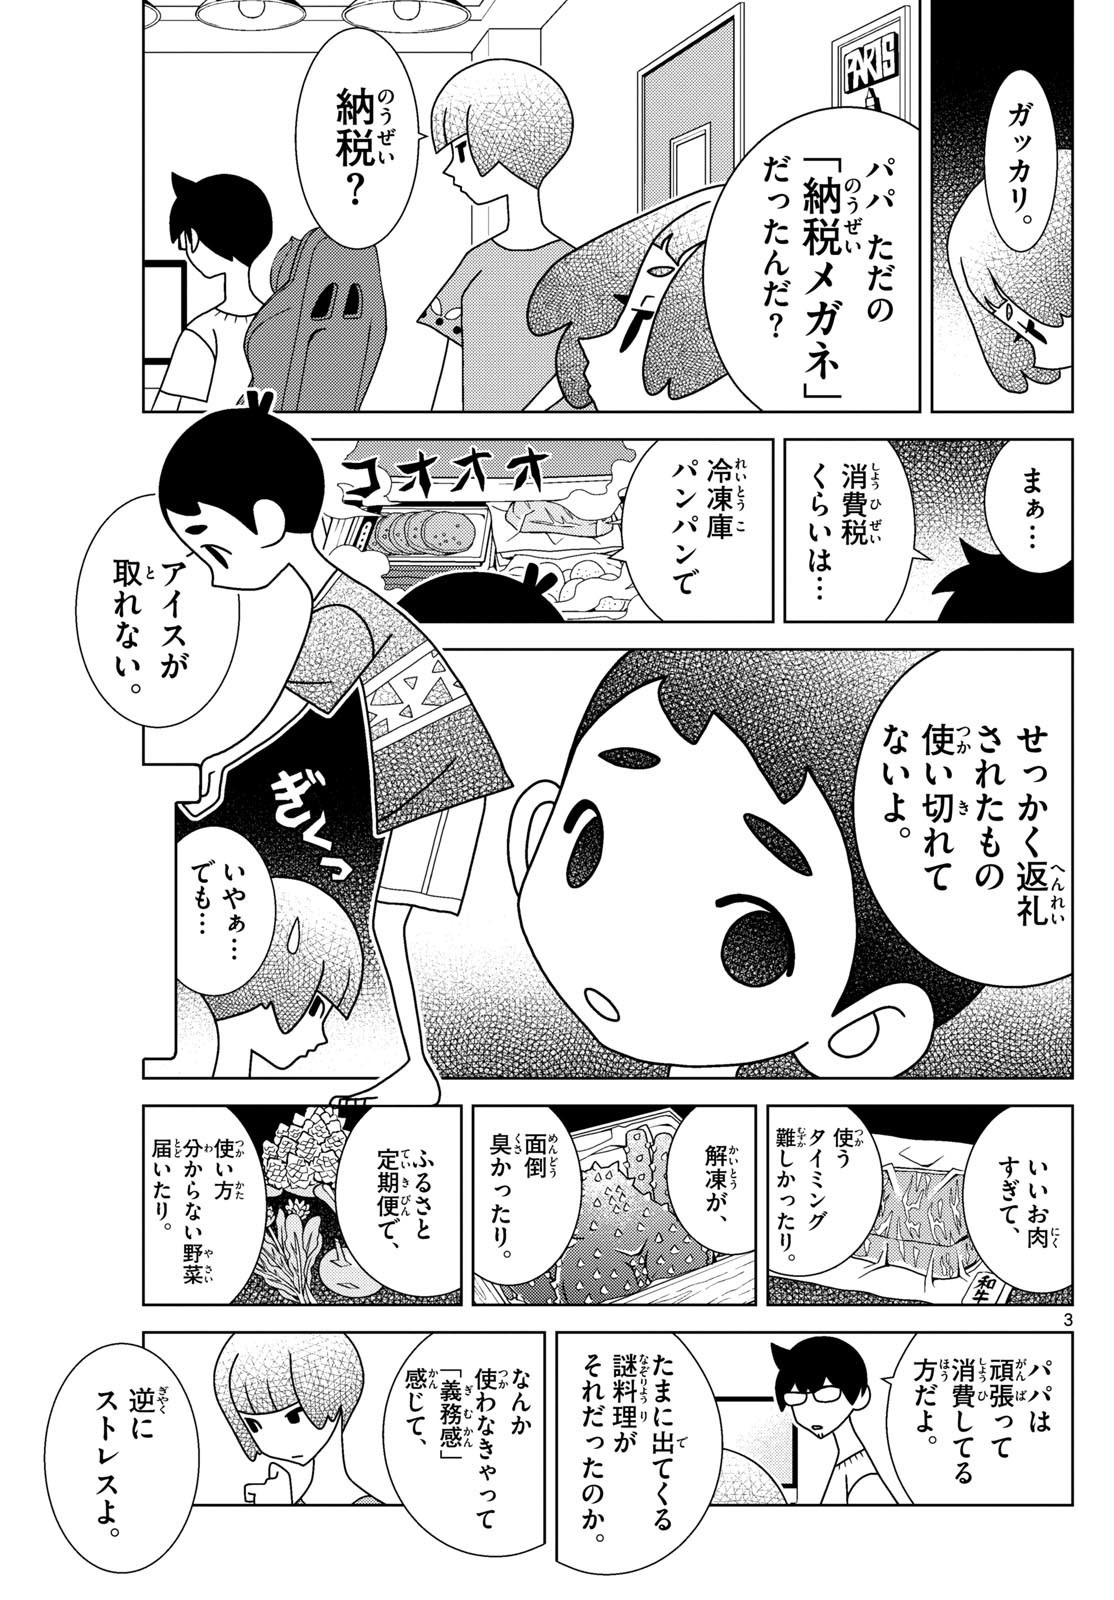 Shibuya Near Family - Chapter 102 - Page 3